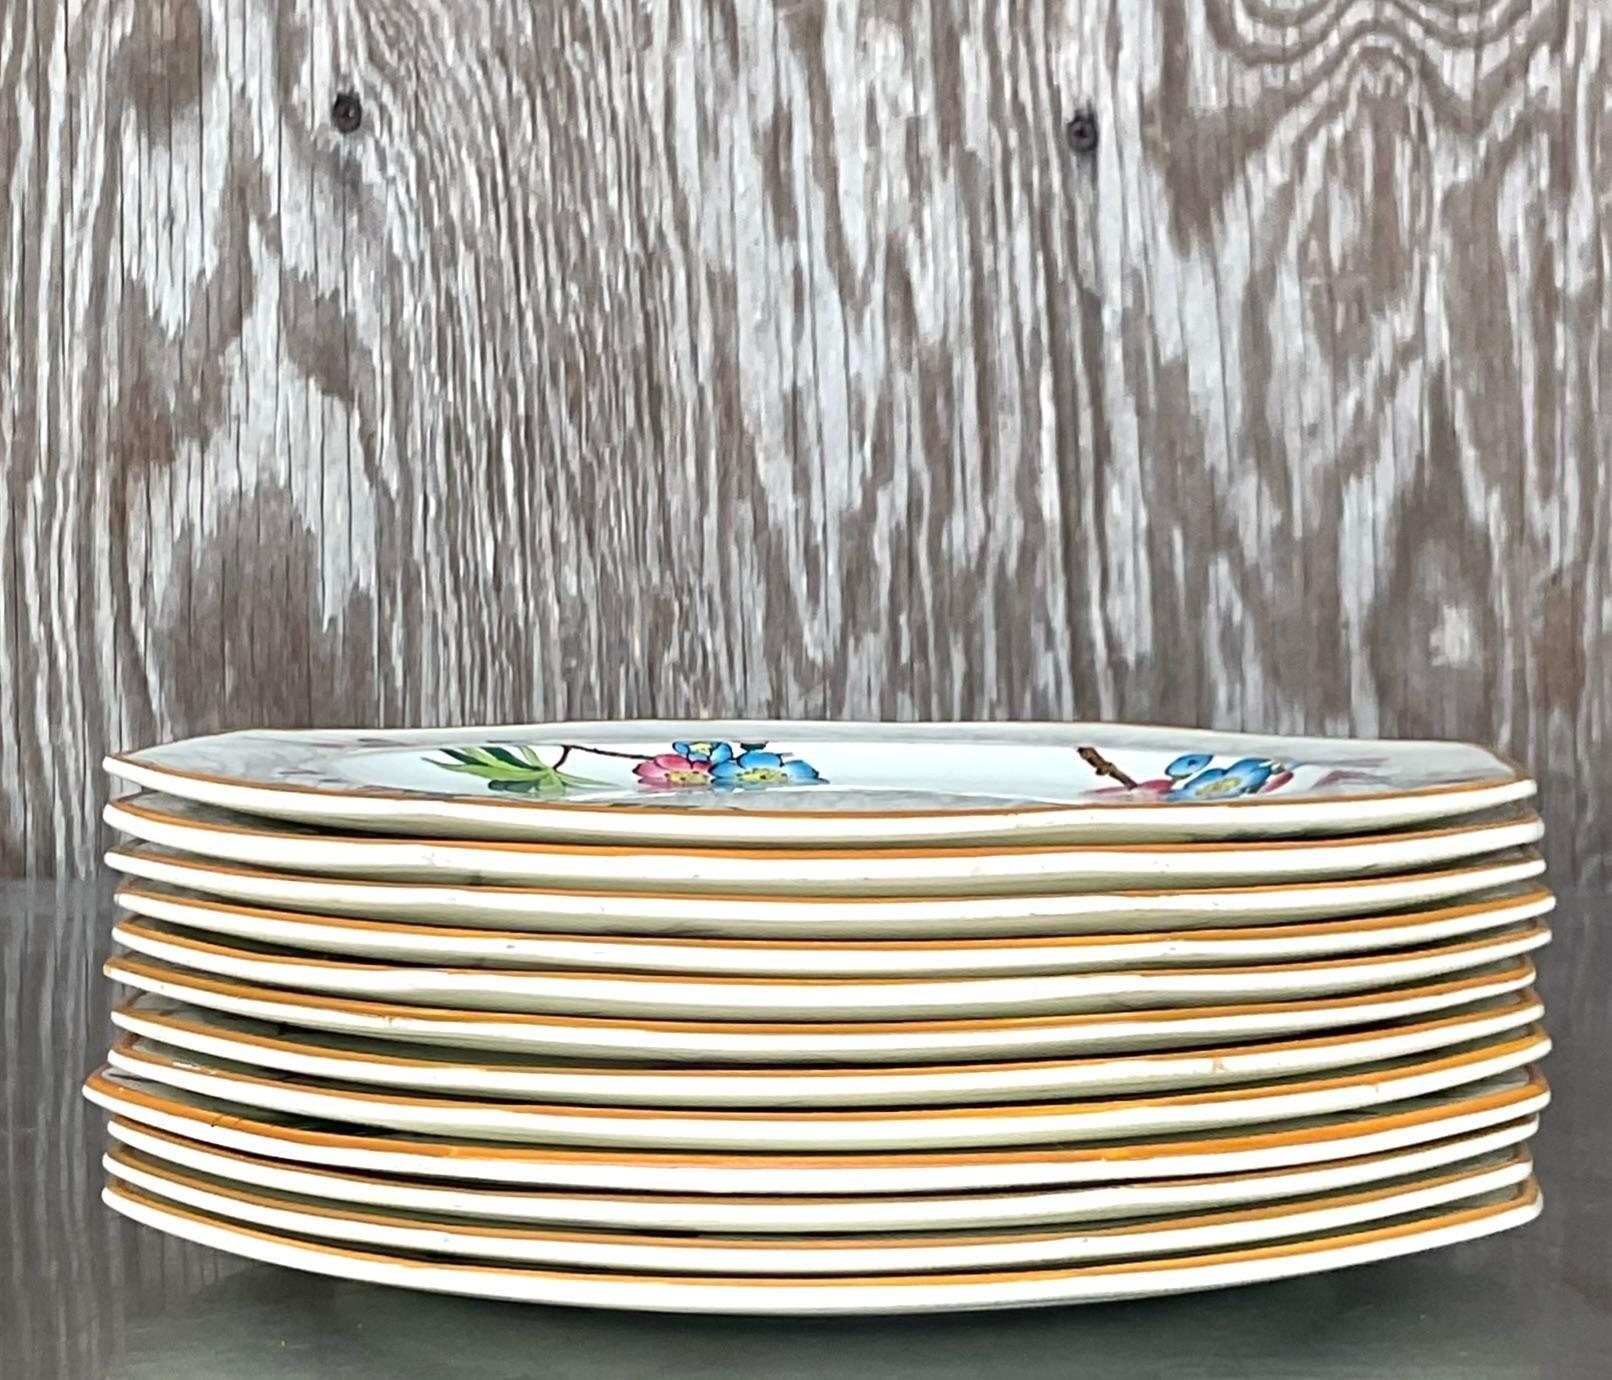 Vintage Regency Wedgwood Spring Blossom Luncheon Plates - Set of 8 2